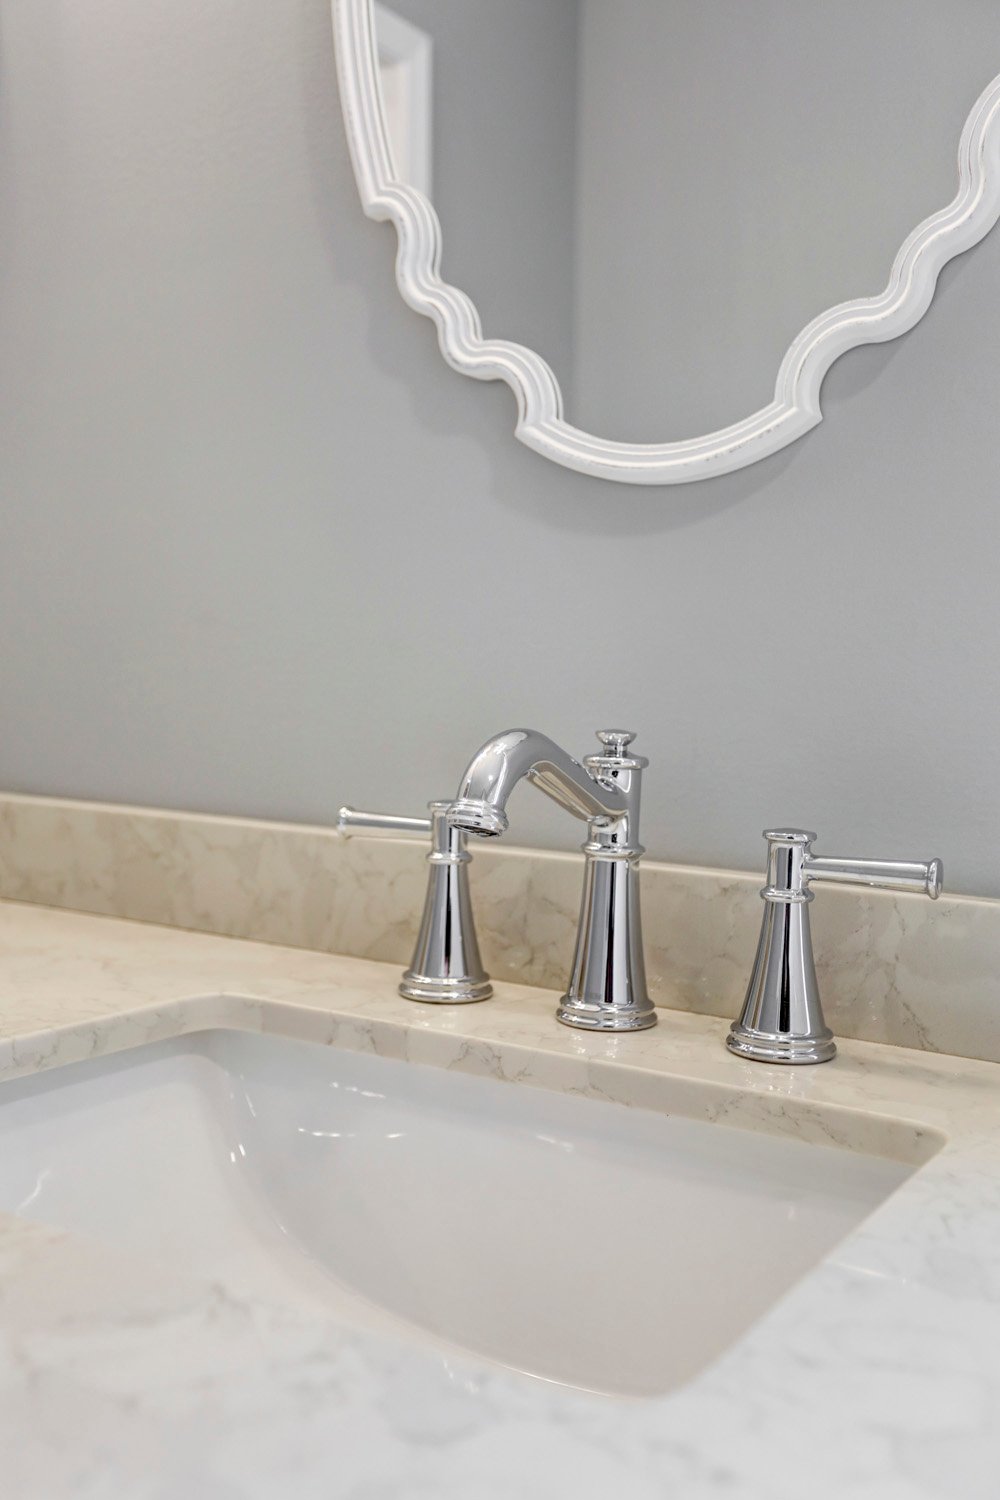 Chrome faucet in Leola Master Bathroom Addition 